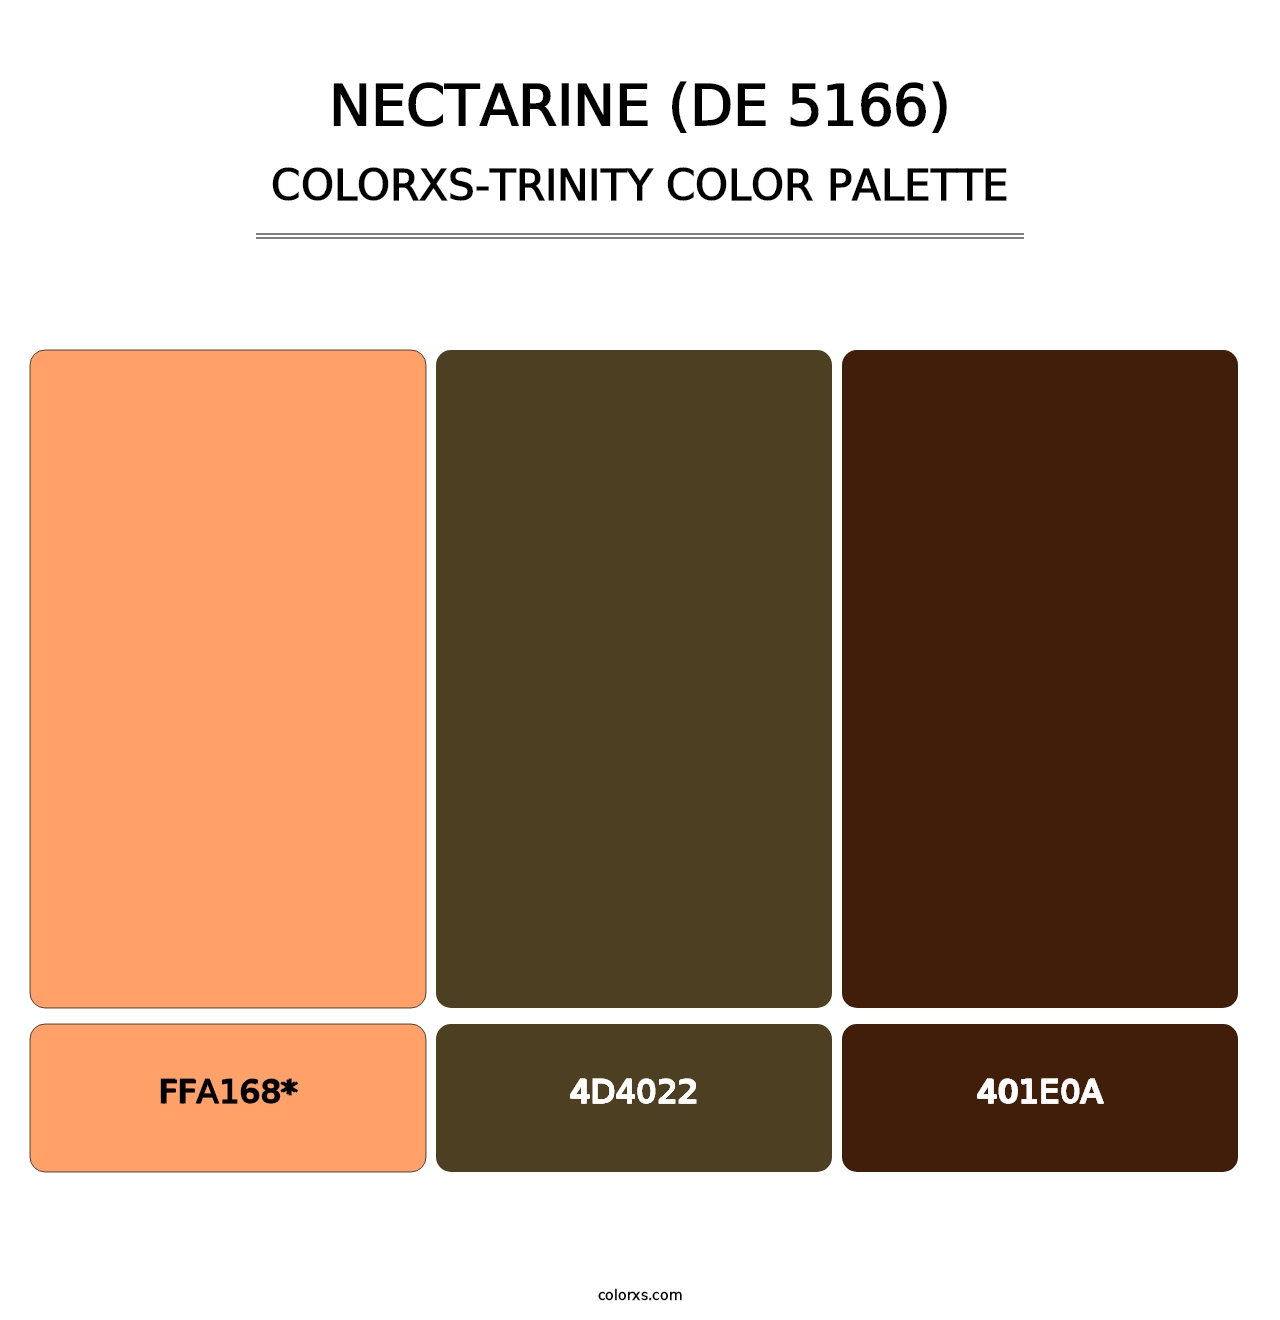 Nectarine (DE 5166) - Colorxs Trinity Palette